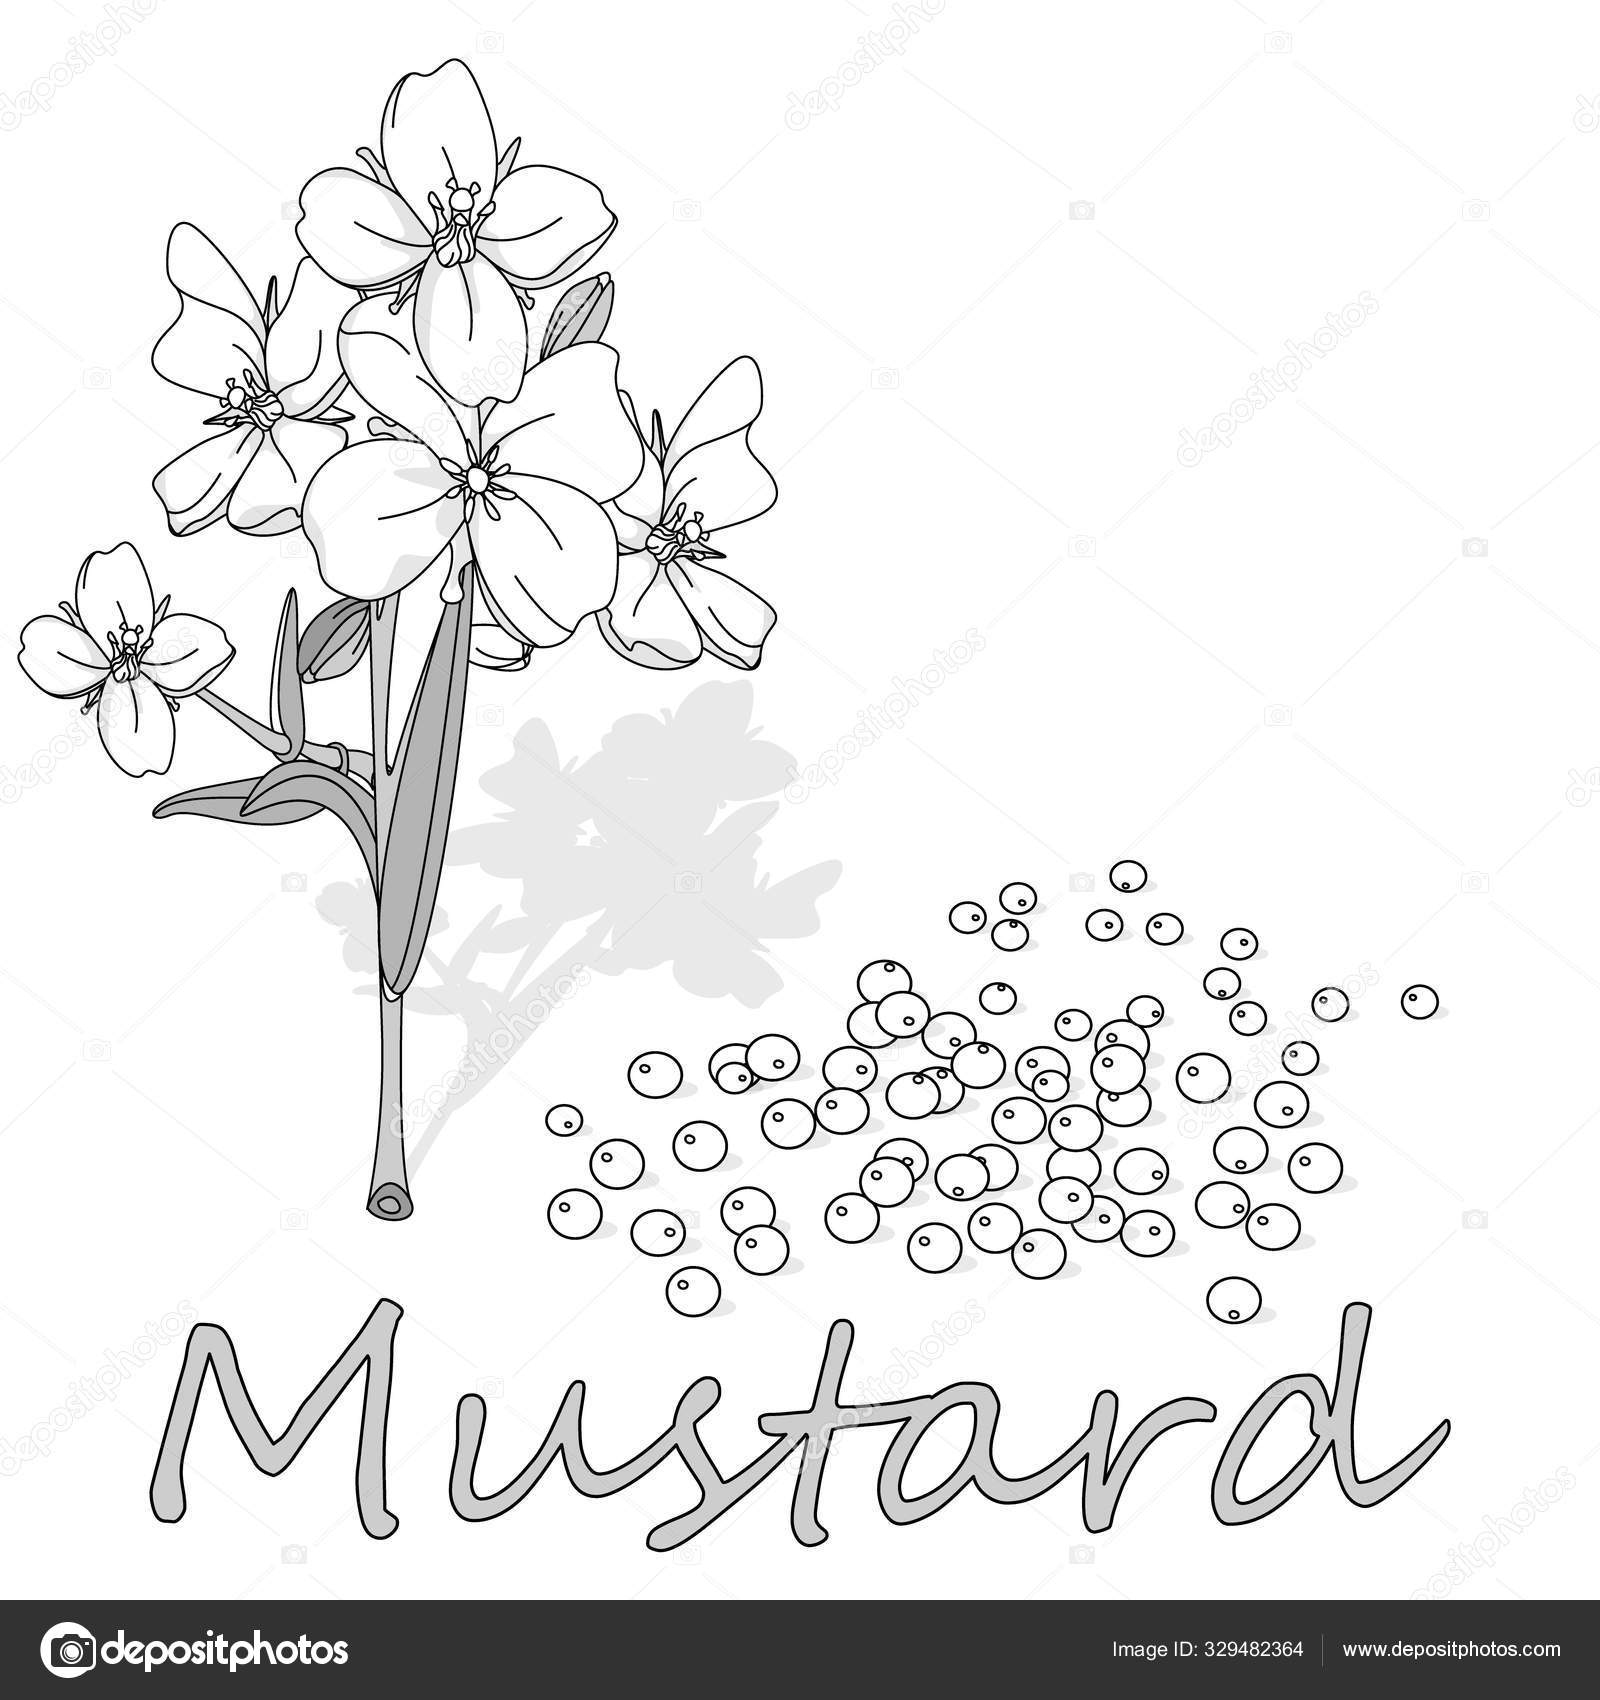 Wild mustard – Identifying Noxious Weeds of Ohio